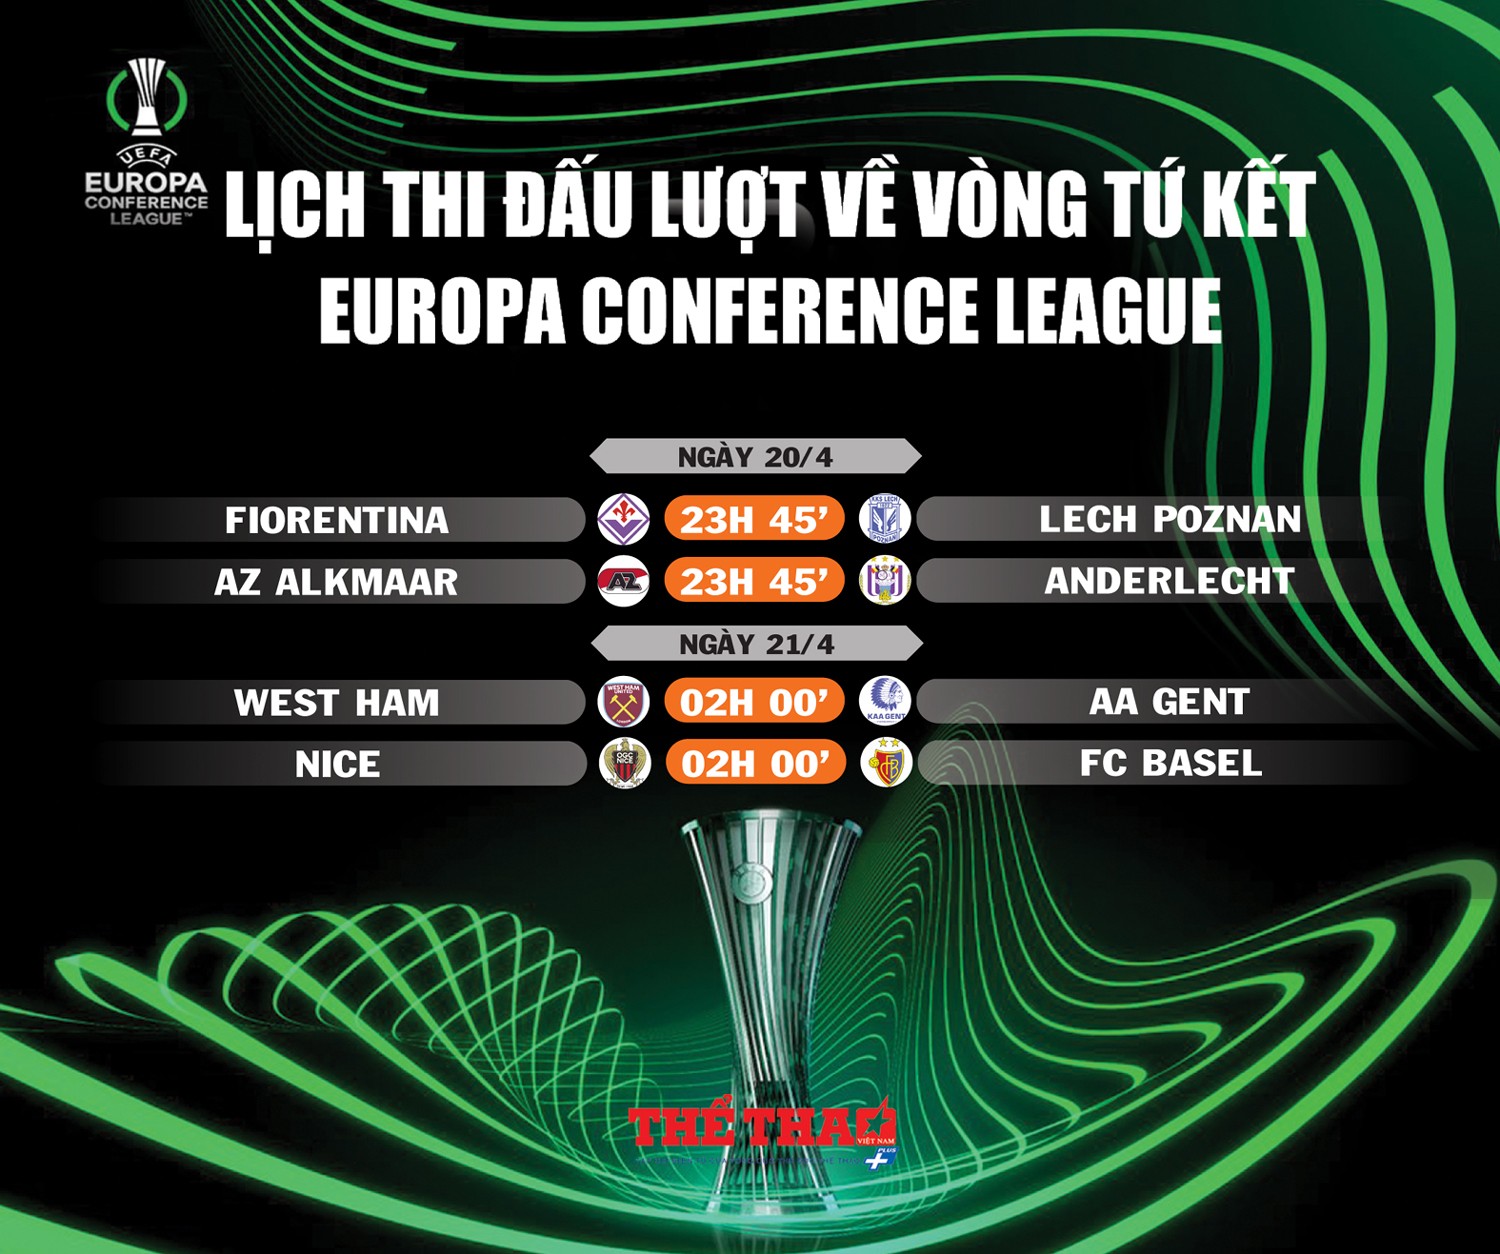 europa-conference-league-luot-ve-copy-1681199601.jpg